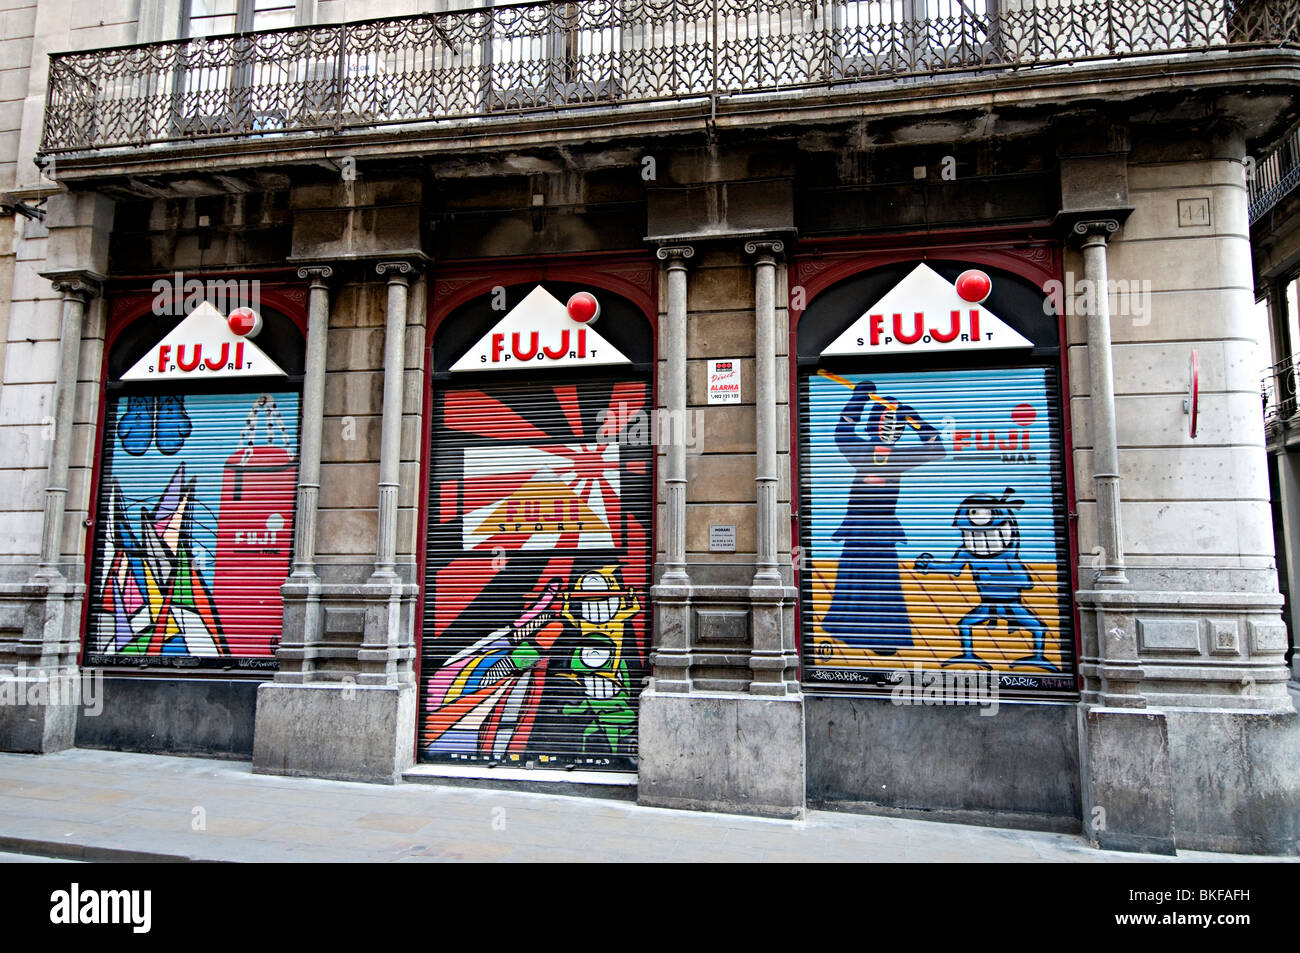 Fuji martial arts sports shop Barcelona Stock Photo - Alamy